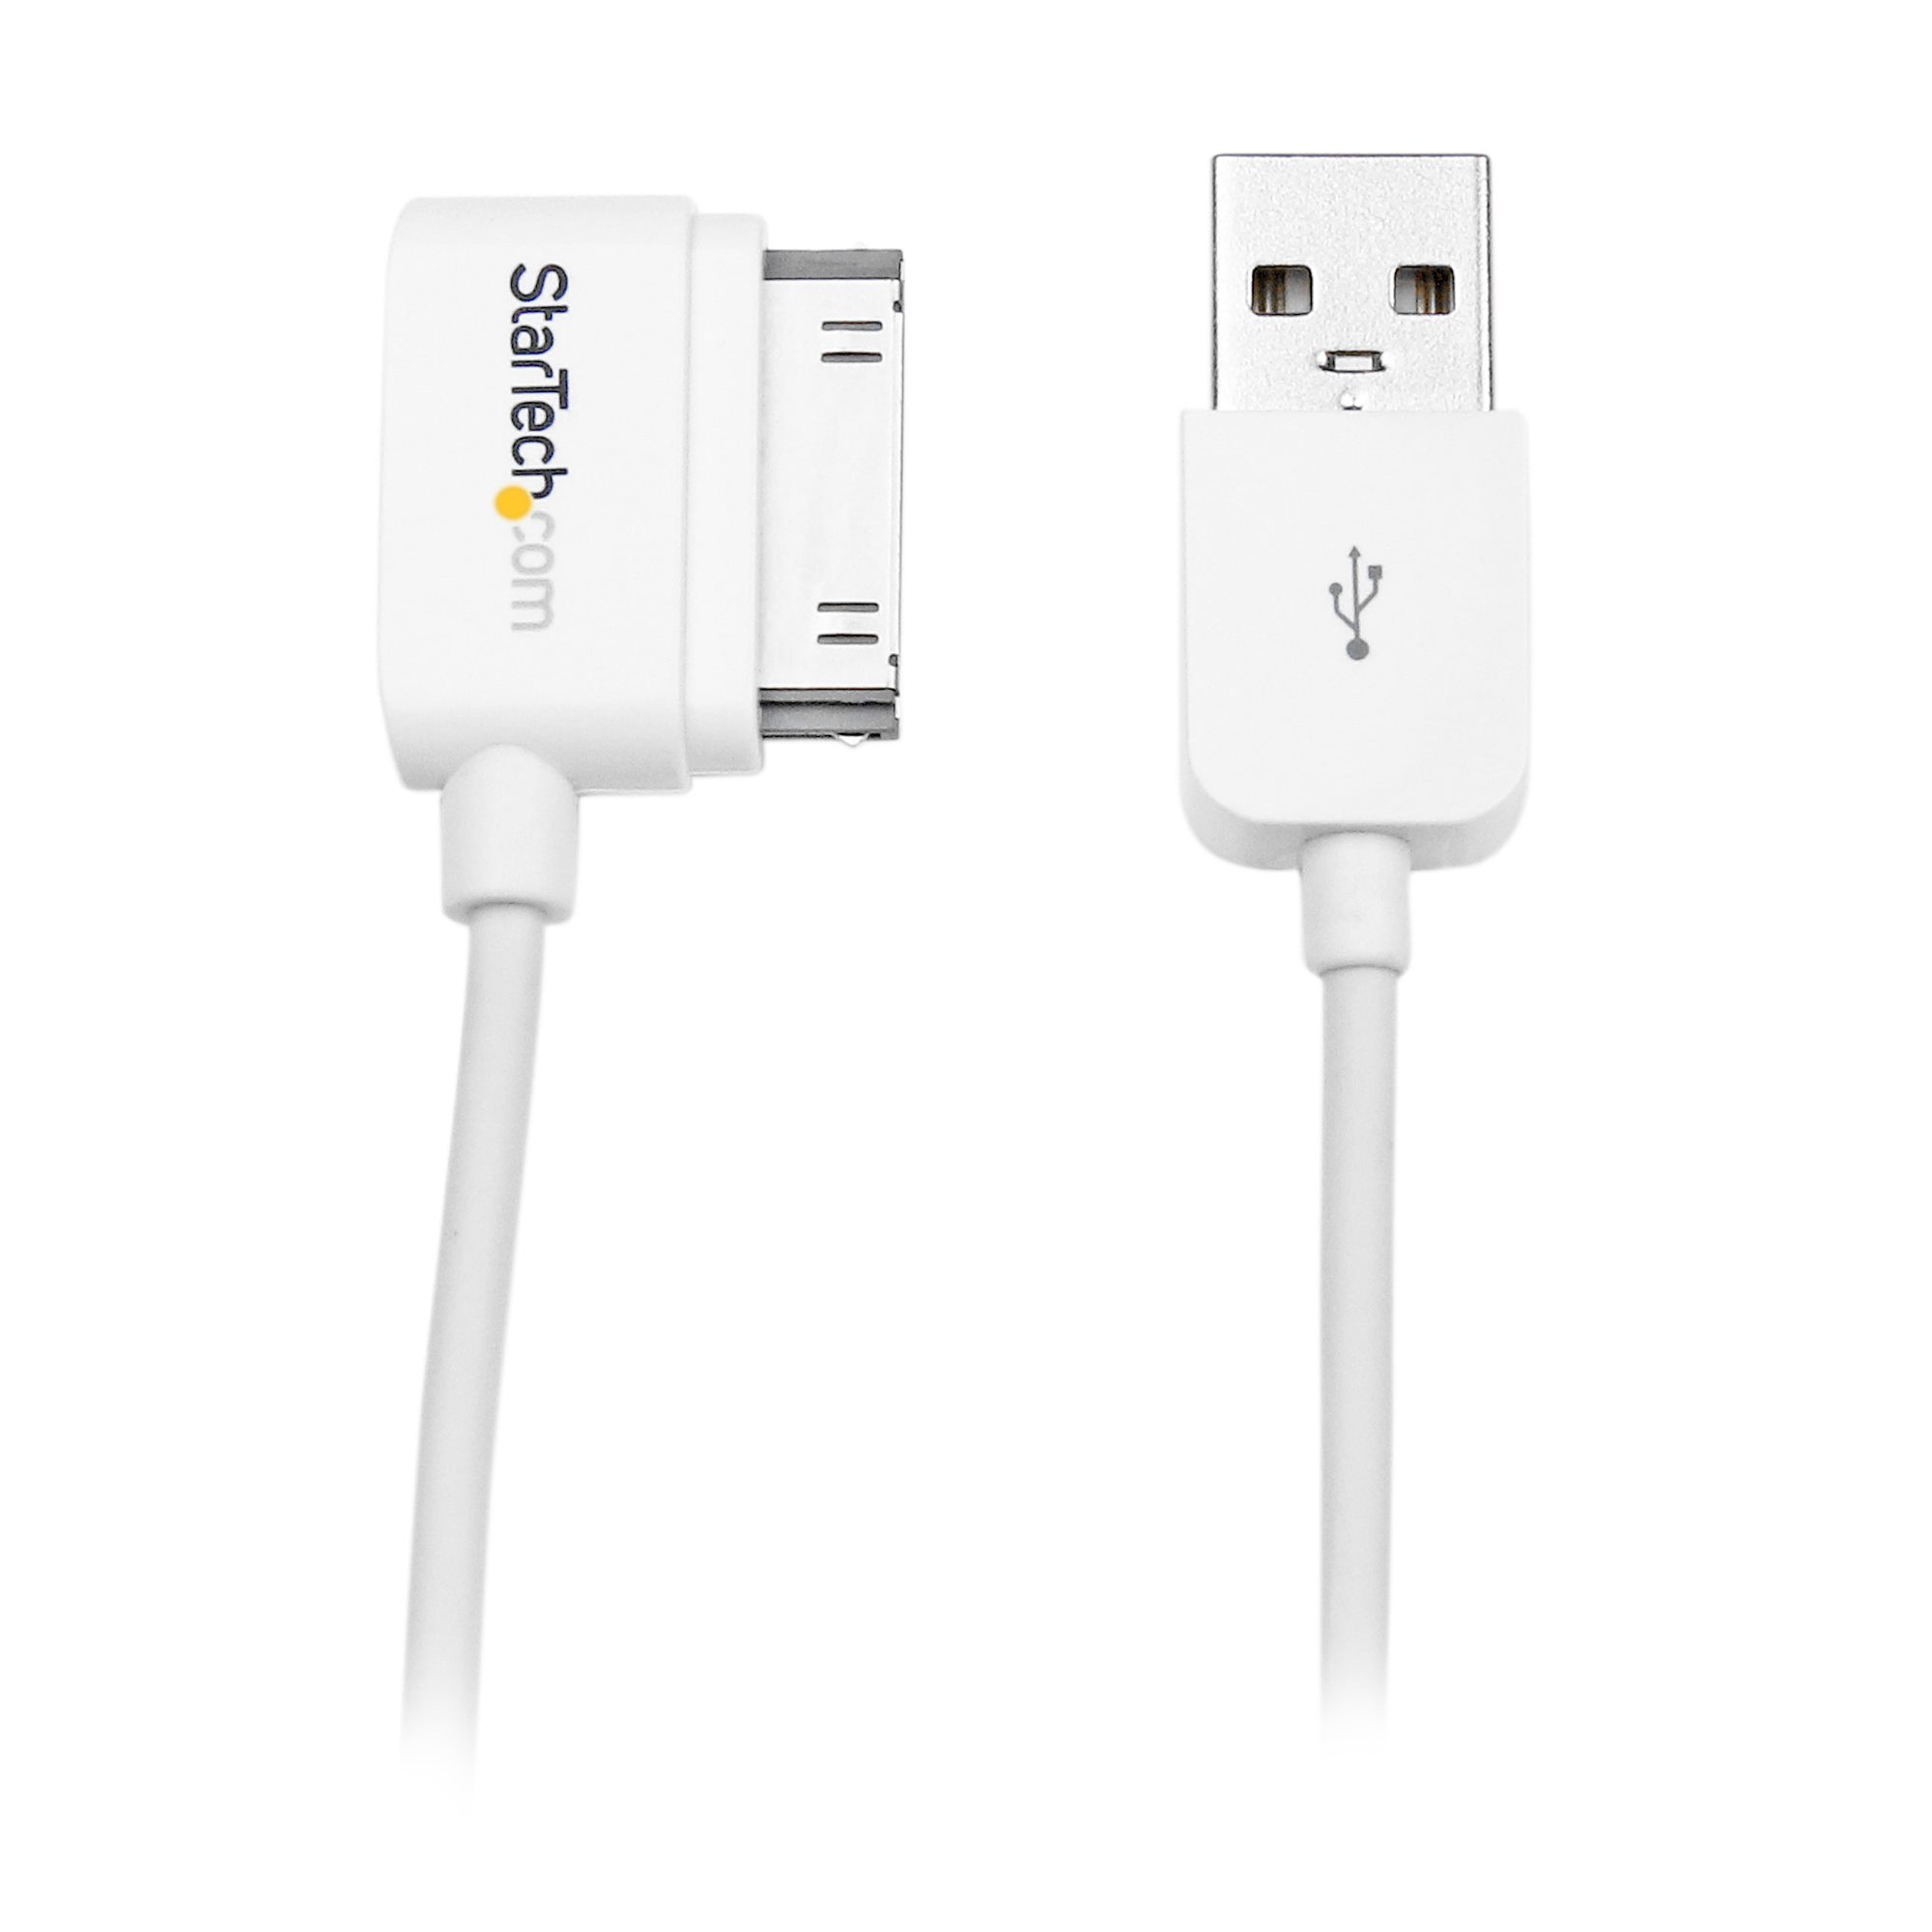 0.5m 30-pin Dock to USB Cable - Cables USB Conector Dock para iPhone, iPod, iPad | StarTech.com España